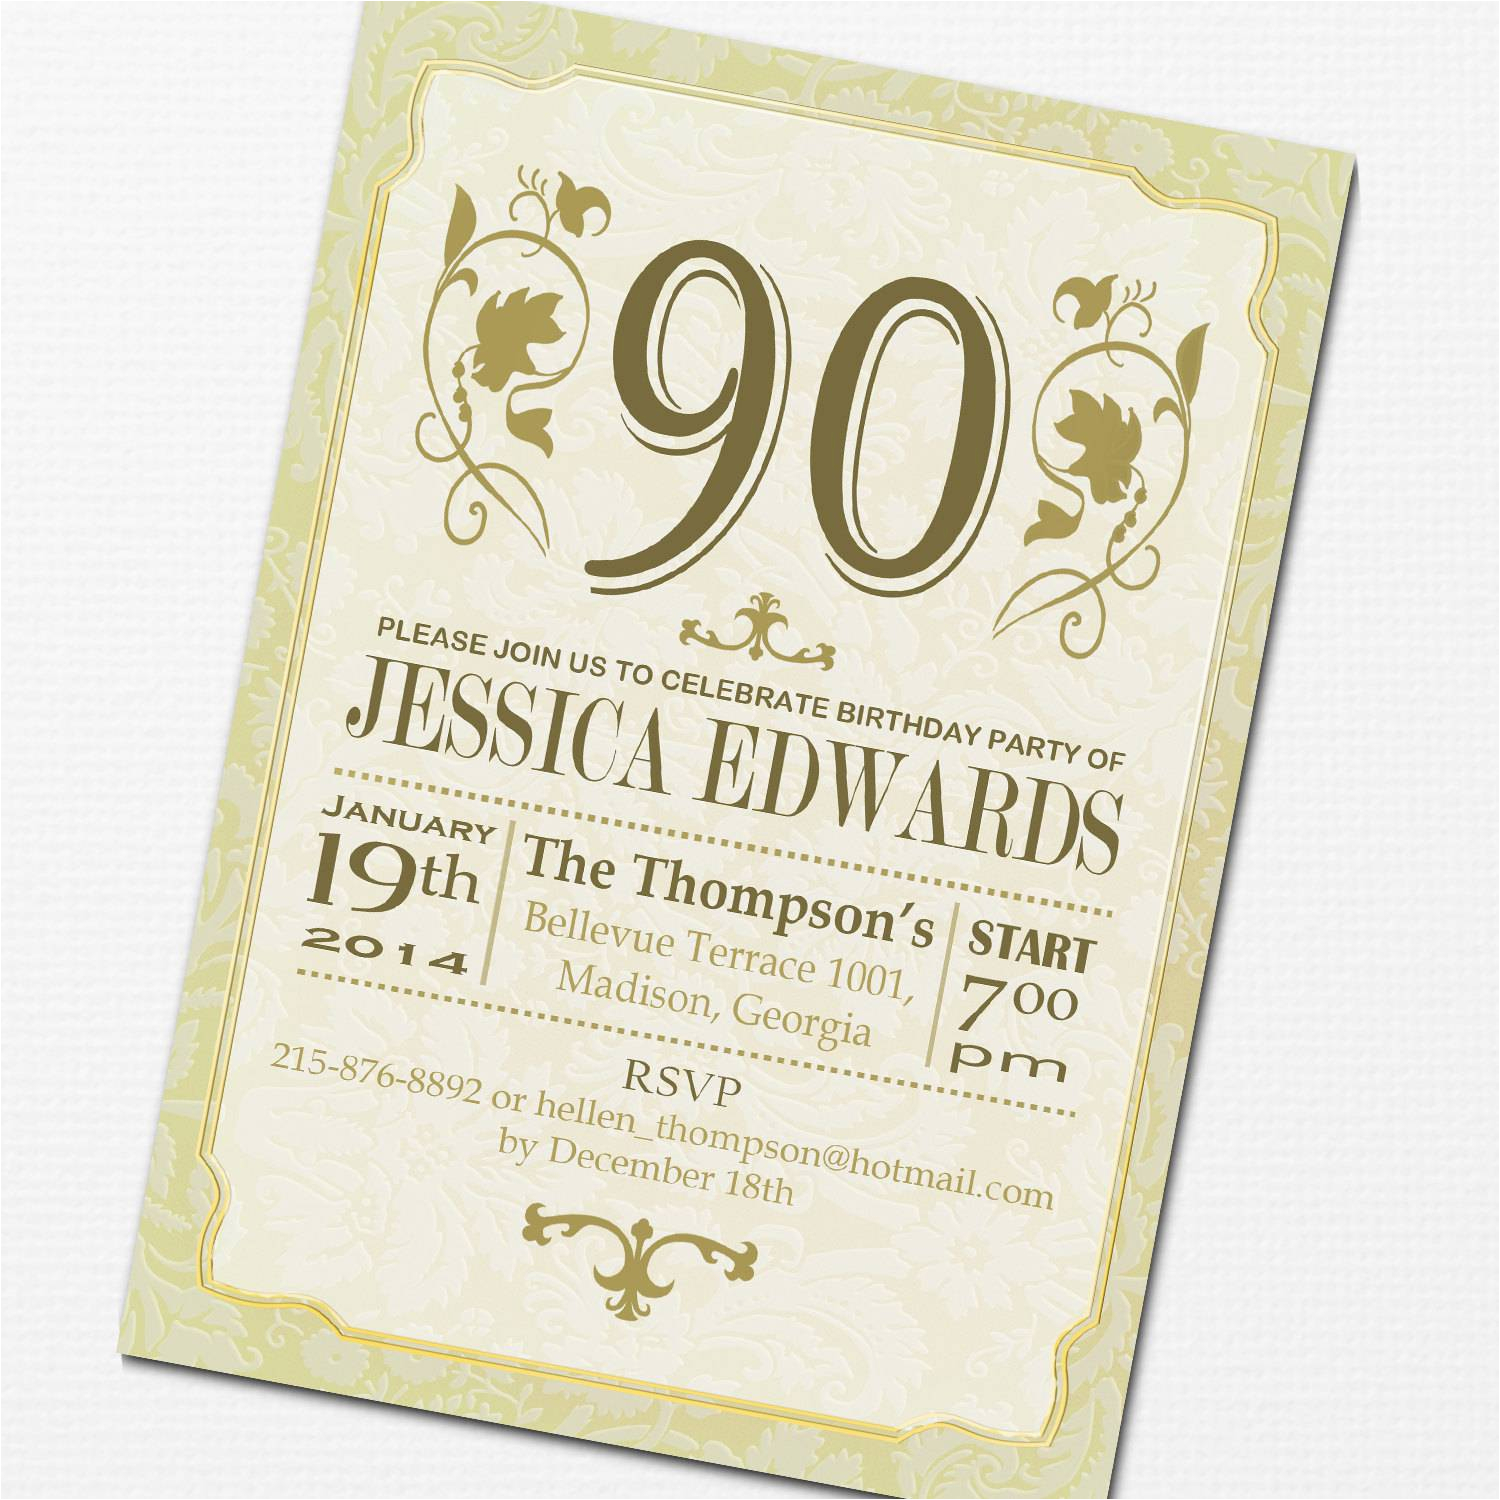 90th birthday party invitations